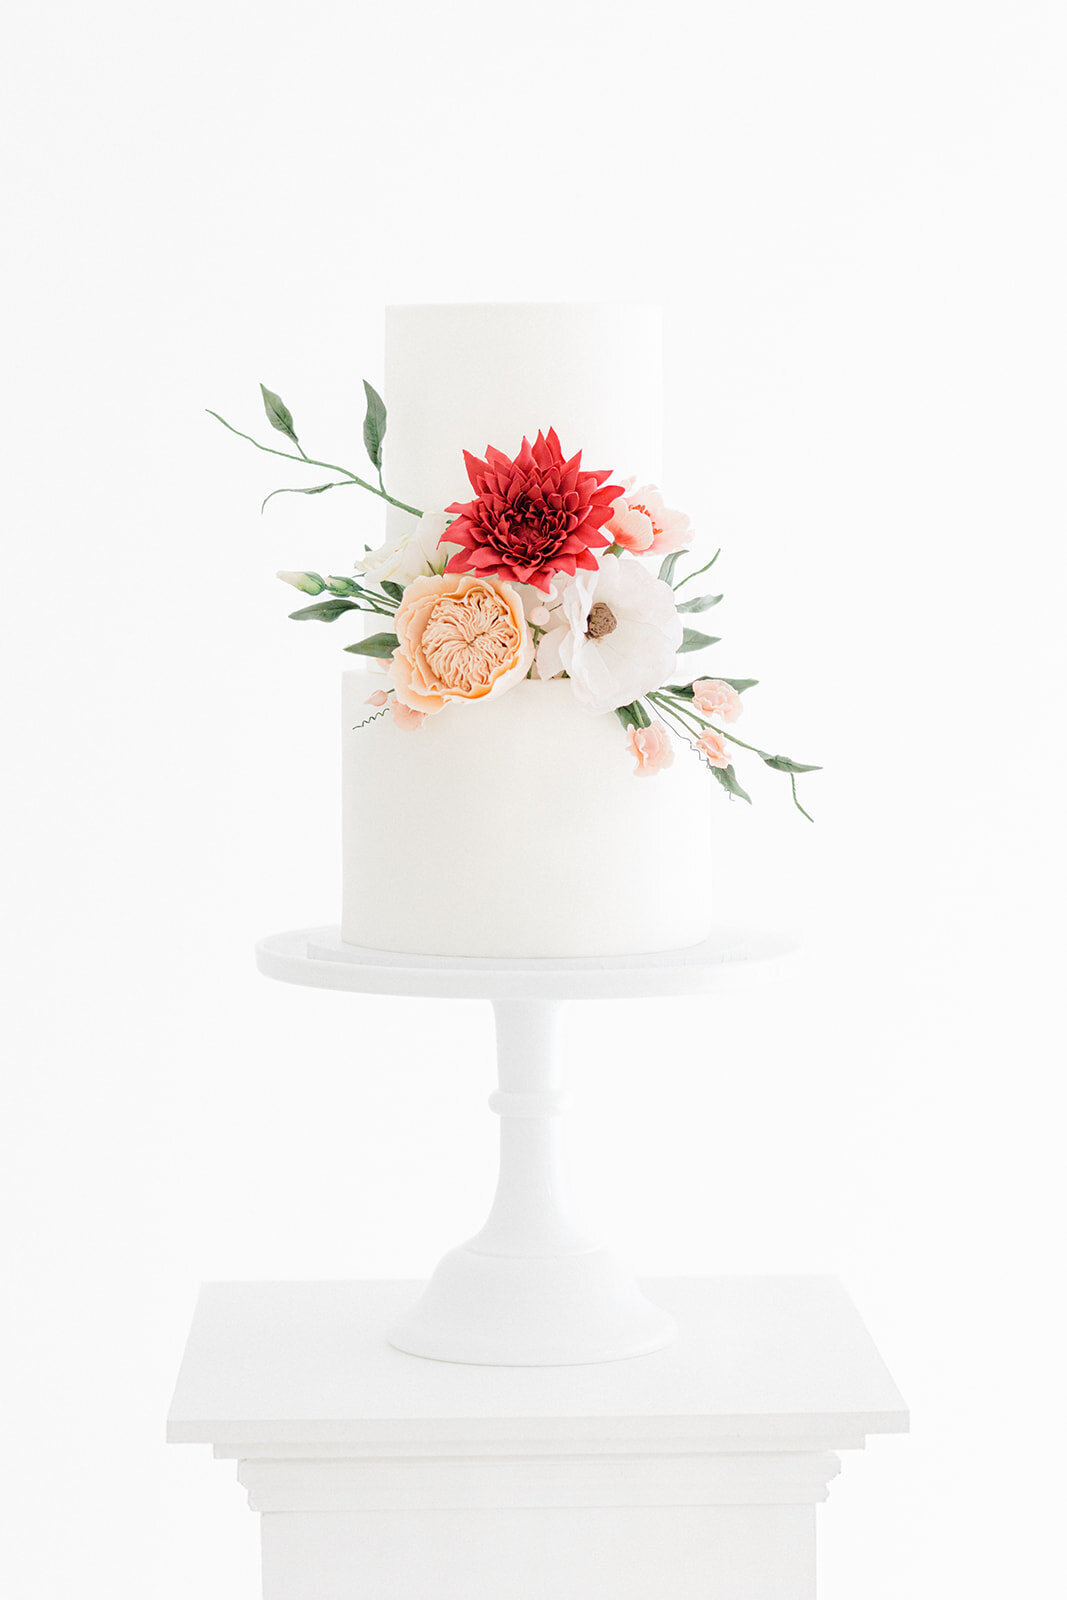 Elegant simple white wedding cake with statement sugar flowers